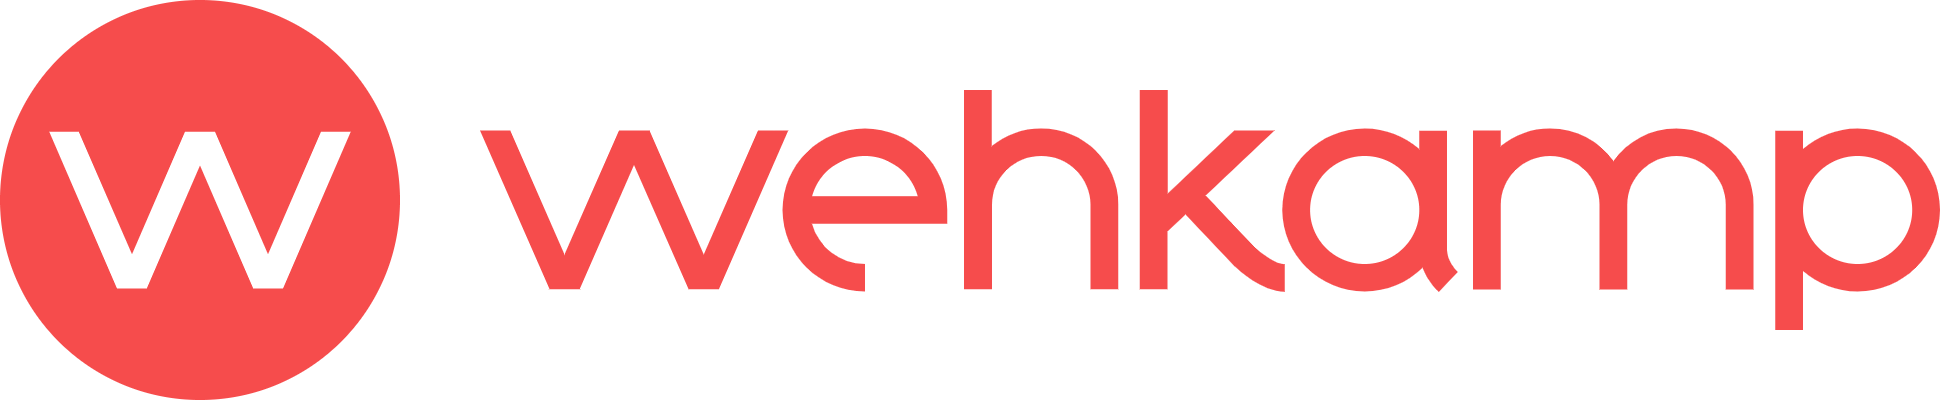 logo Wehkamp.nl